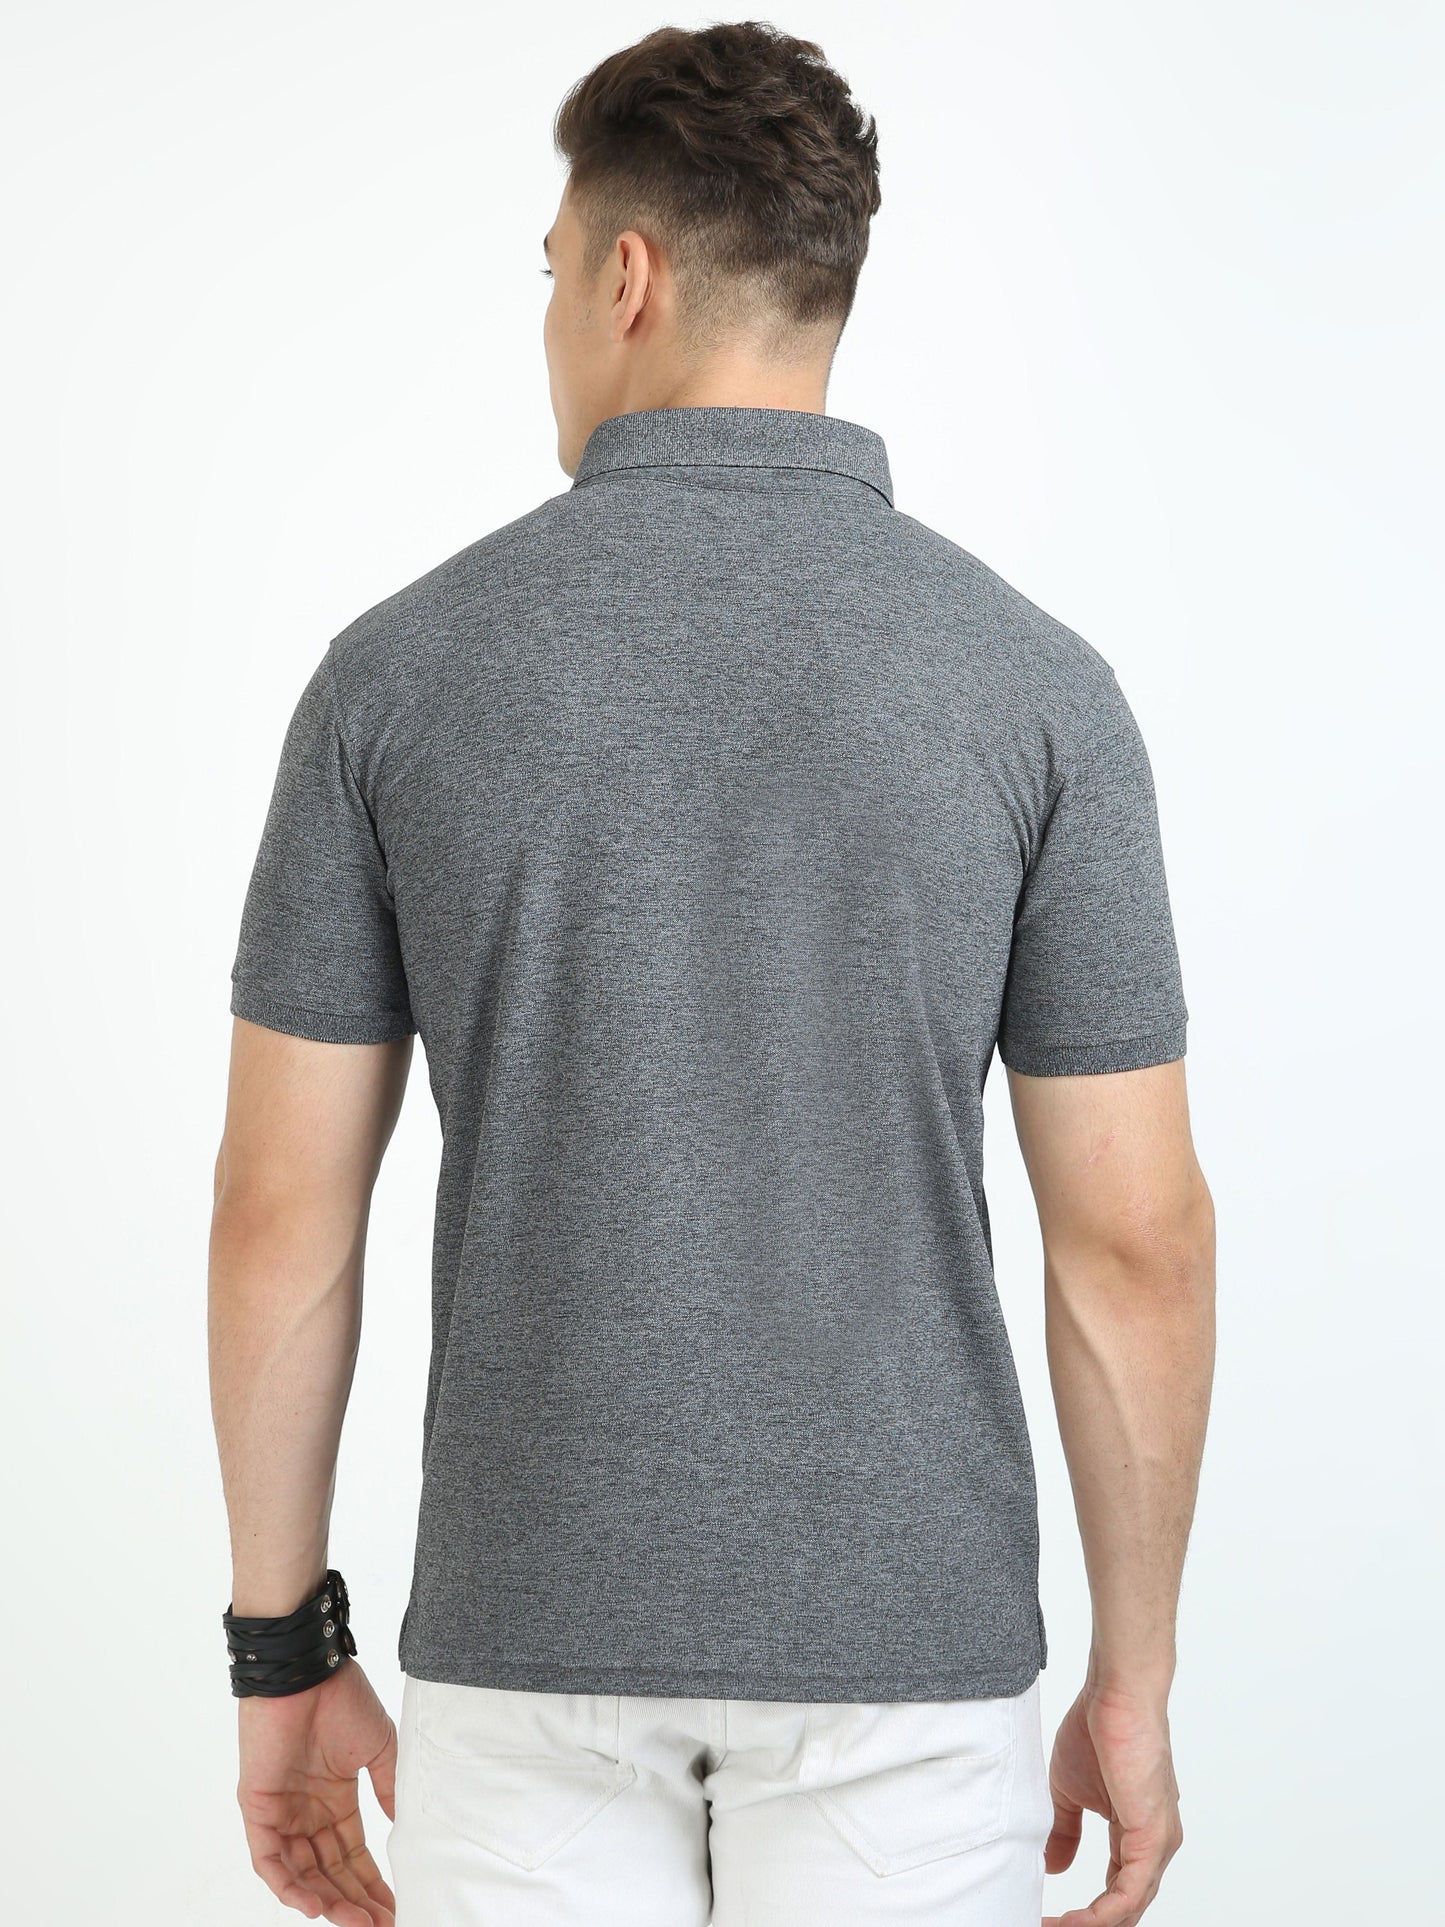 Charcoal Grey Melange Men's Polo T-shirt